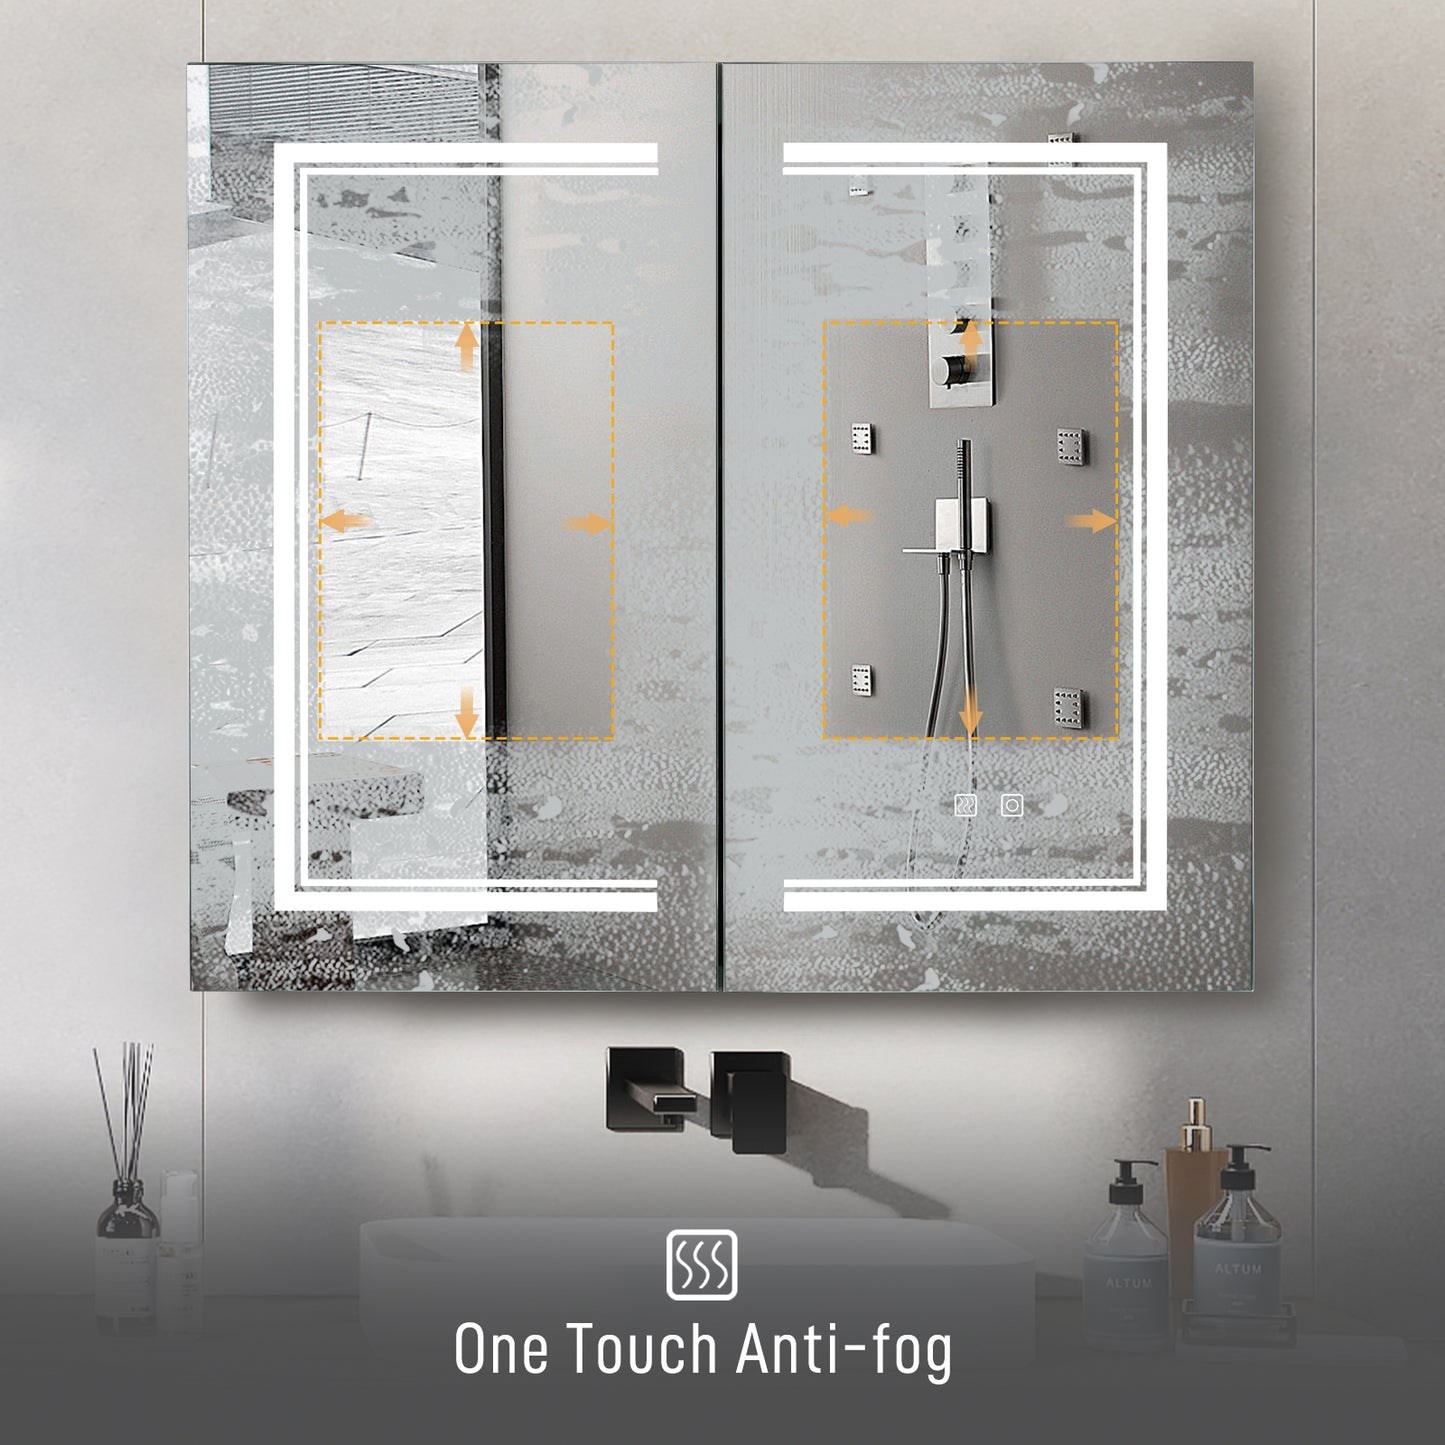 FCH 32*28in OZON Board, 1 Door, 2 Layers, Led Light, Anti-Fog